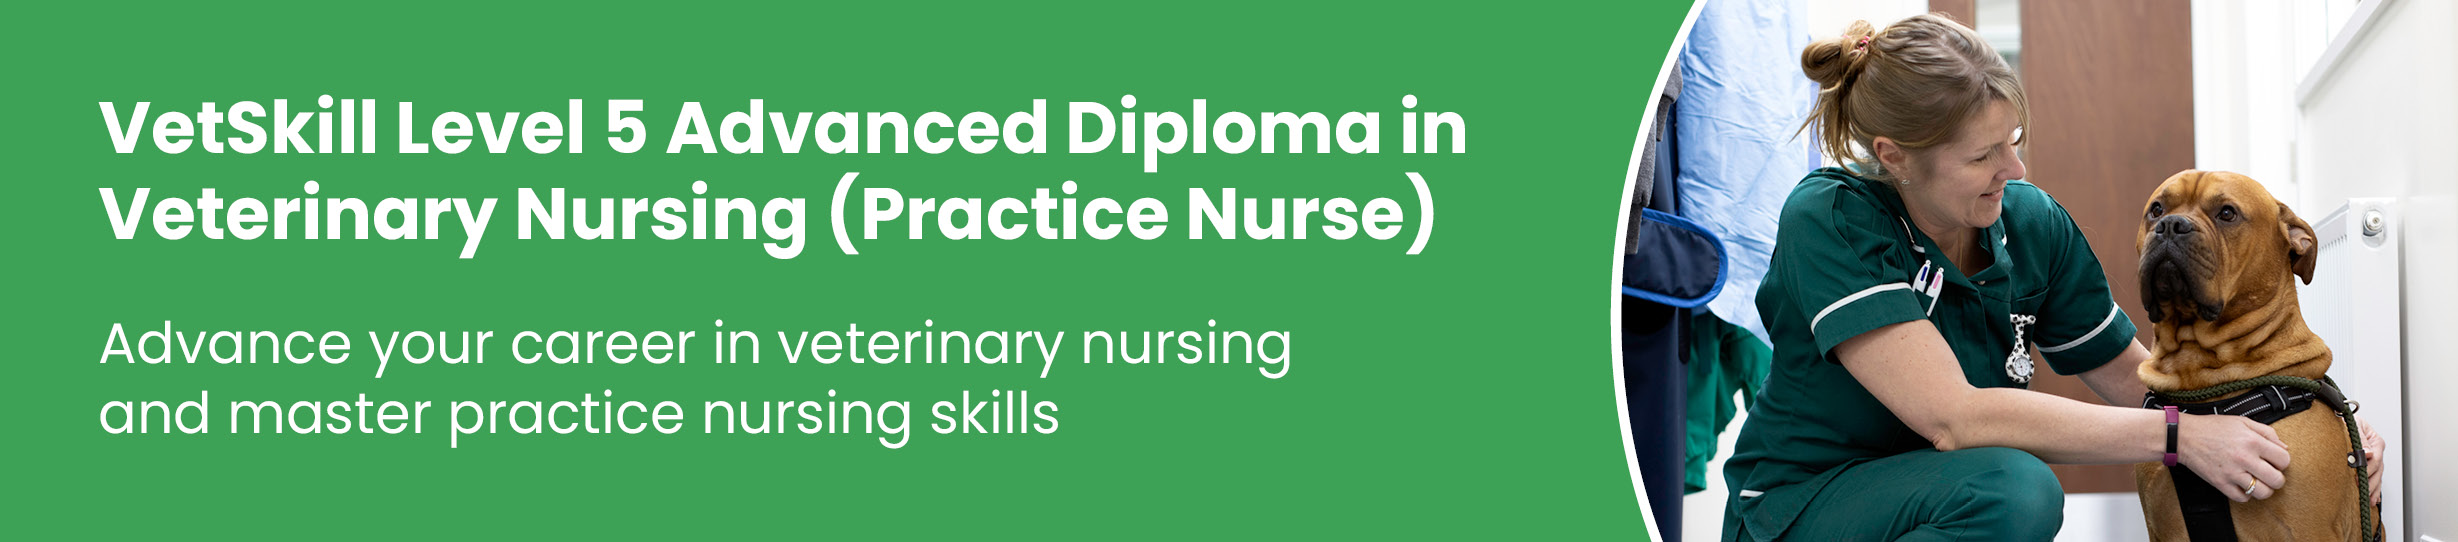 Course: VetSkill Level 5 Advanced Diploma in Veterinary Nursing (Practice Nurse)